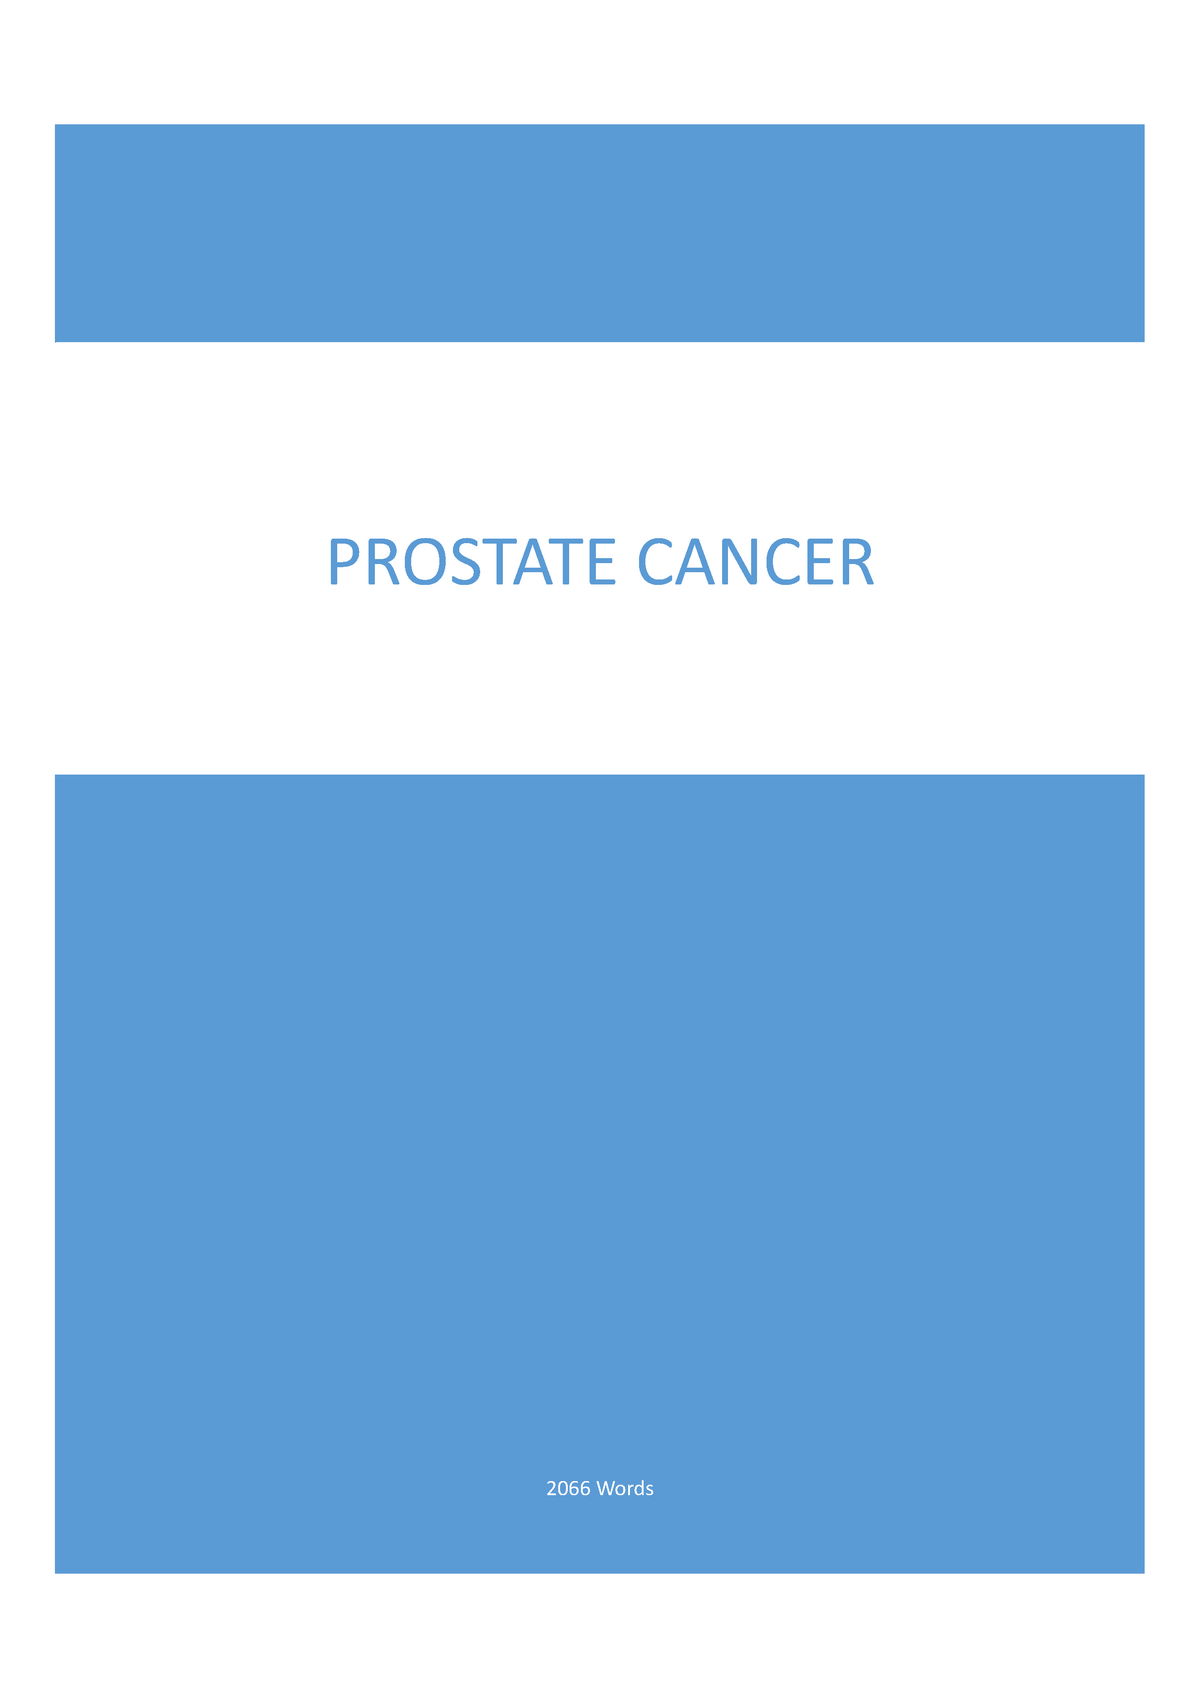 essay of prostate cancer